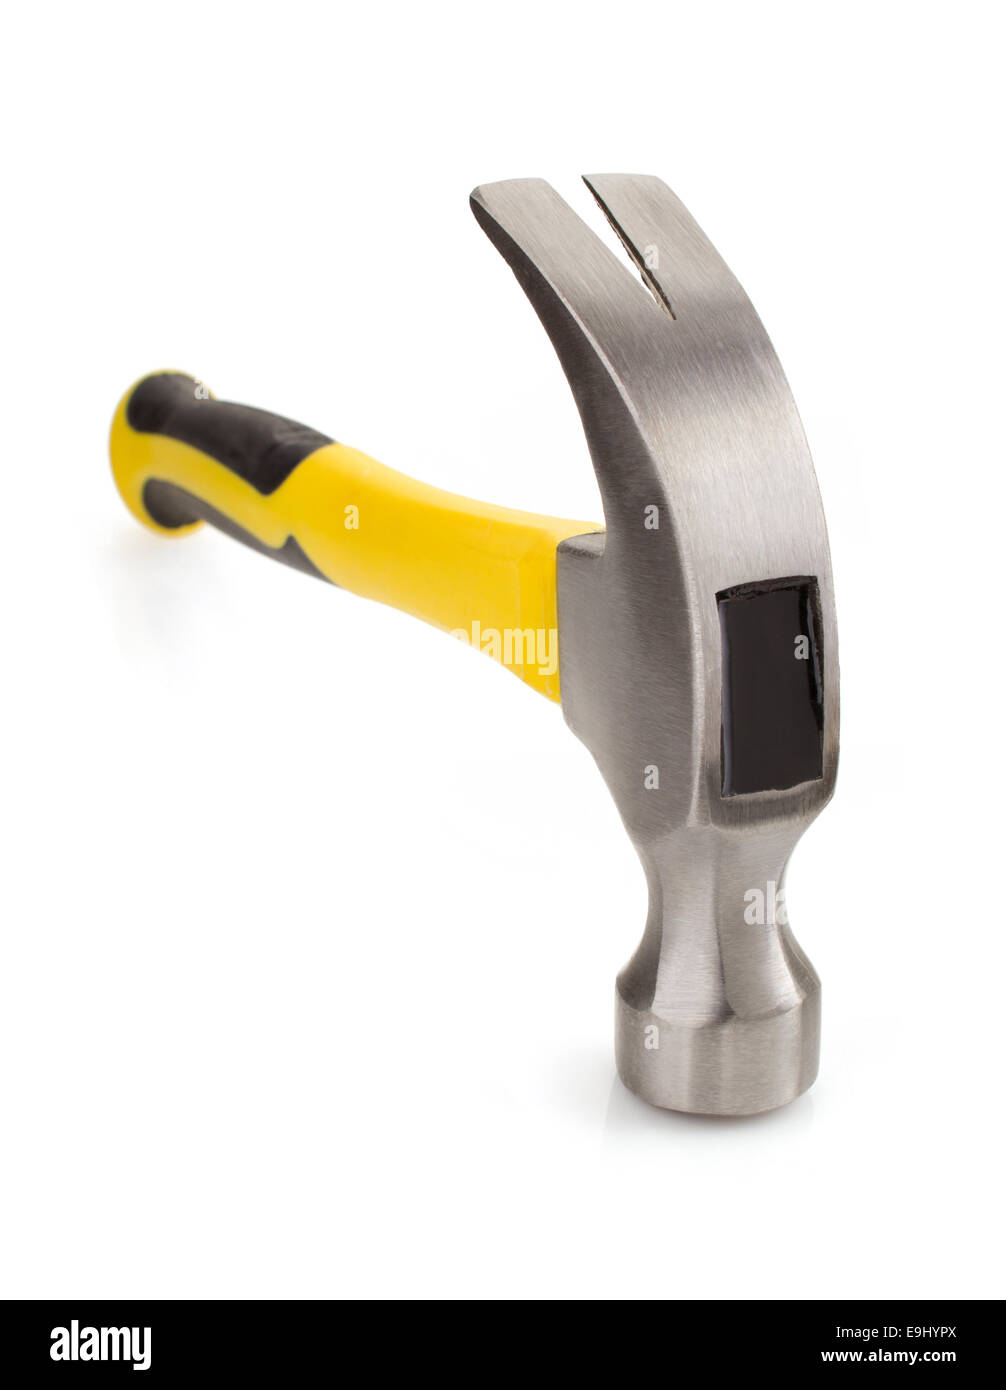 hammer tool isolated on white background Stock Photo - Alamy